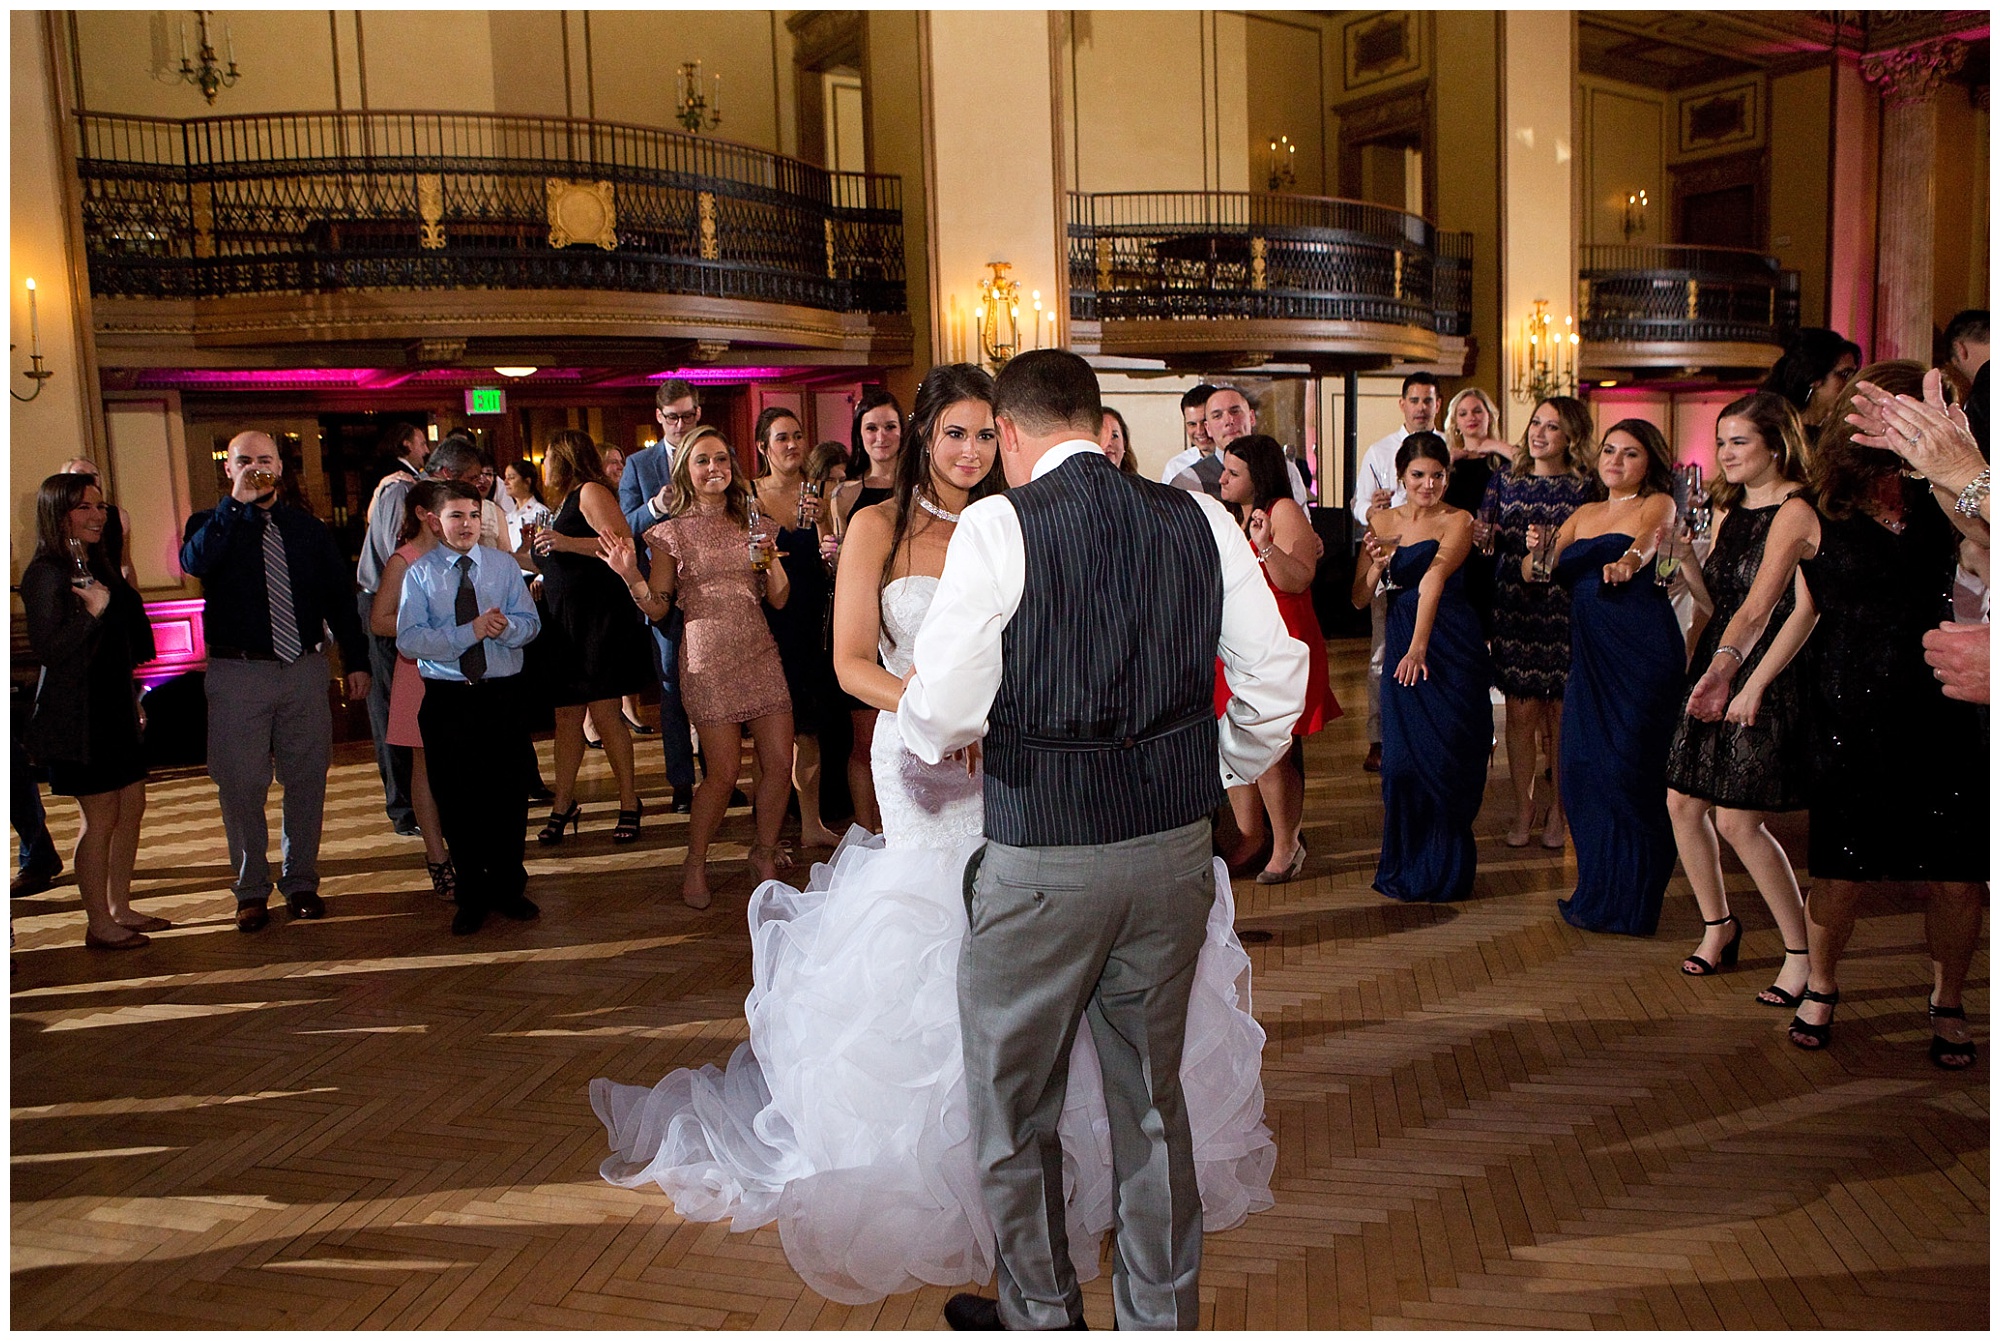 Photo of a bride and groom onthe dance floor